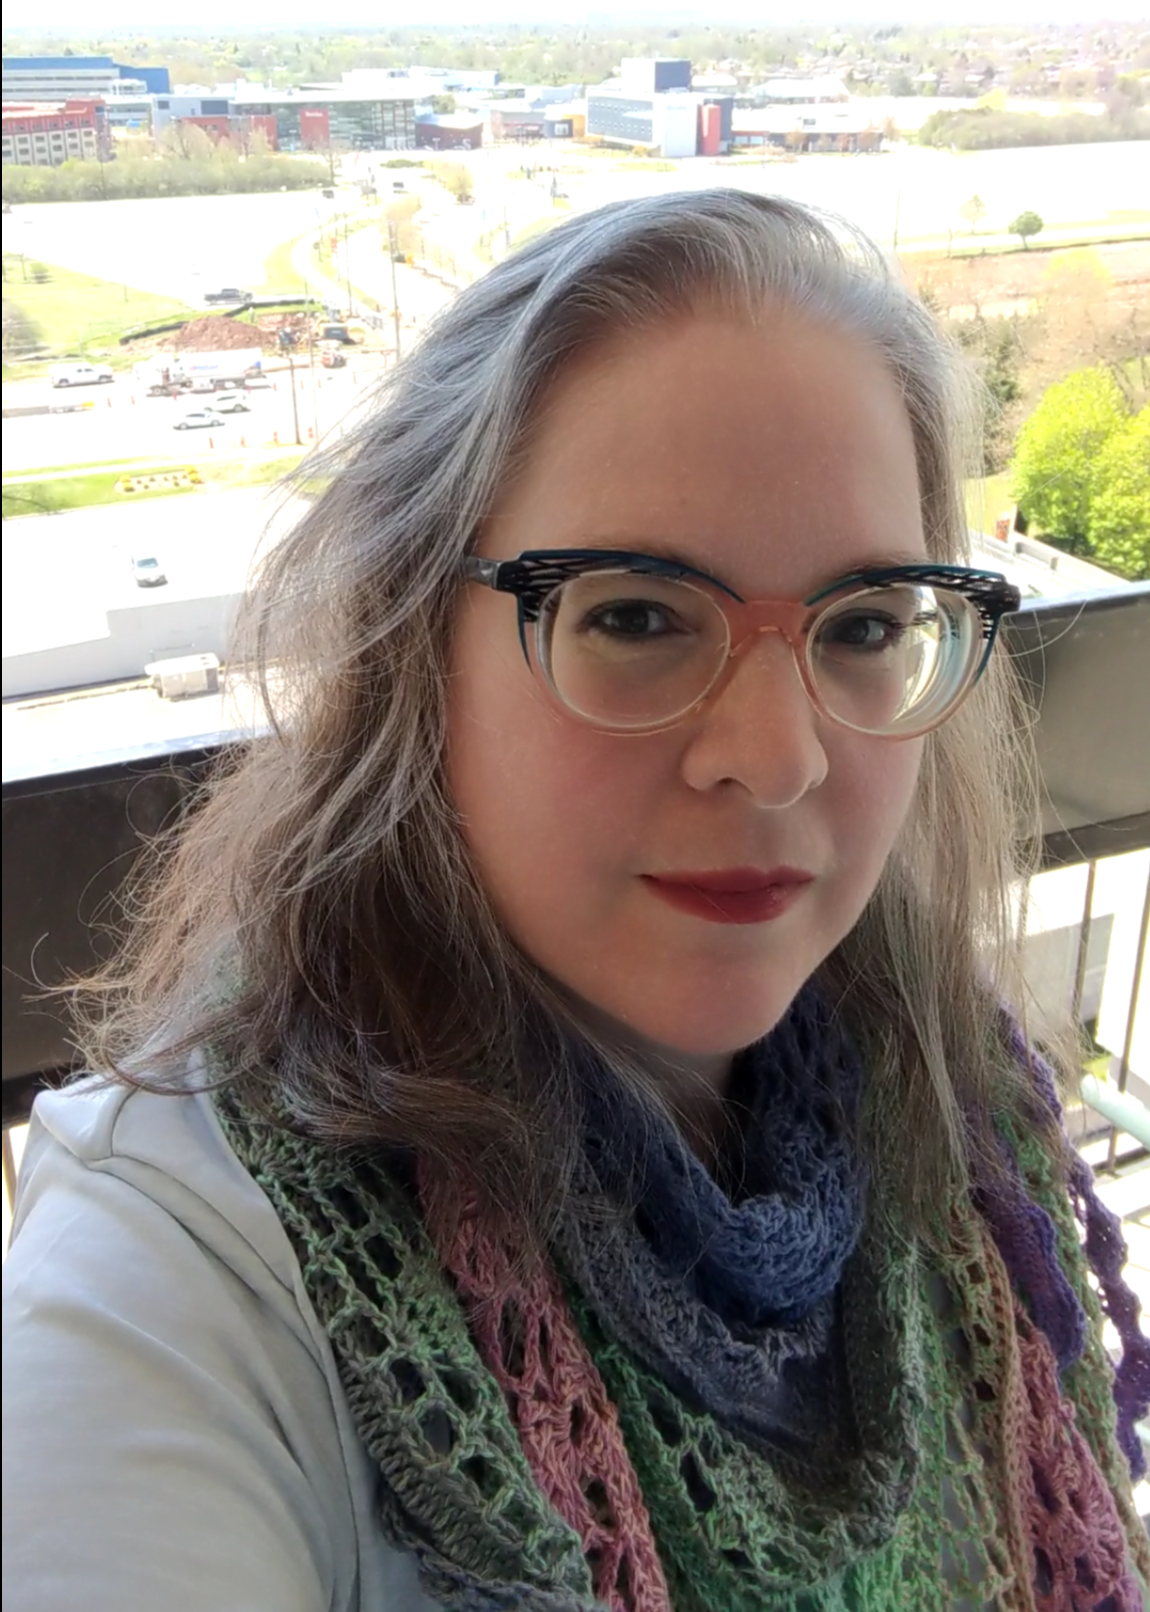 wendi wearing glasses, outside on a high-rise balcony